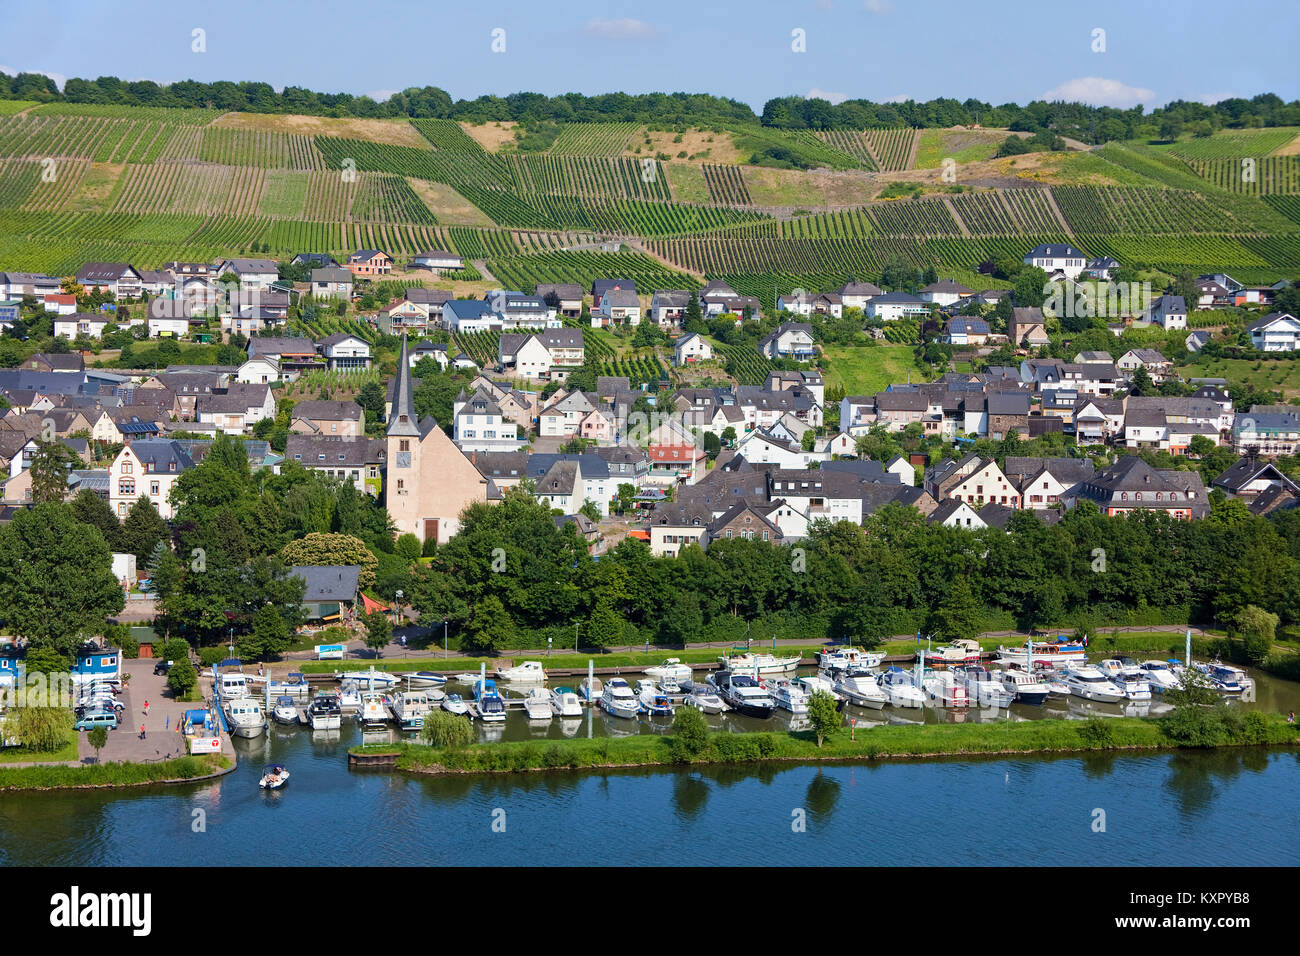 Village and Marina at Moselle river, Neumagen-Dhron, oldest wine village of Germany, Rhineland-Palatinate, Germany, Europe Stock Photo